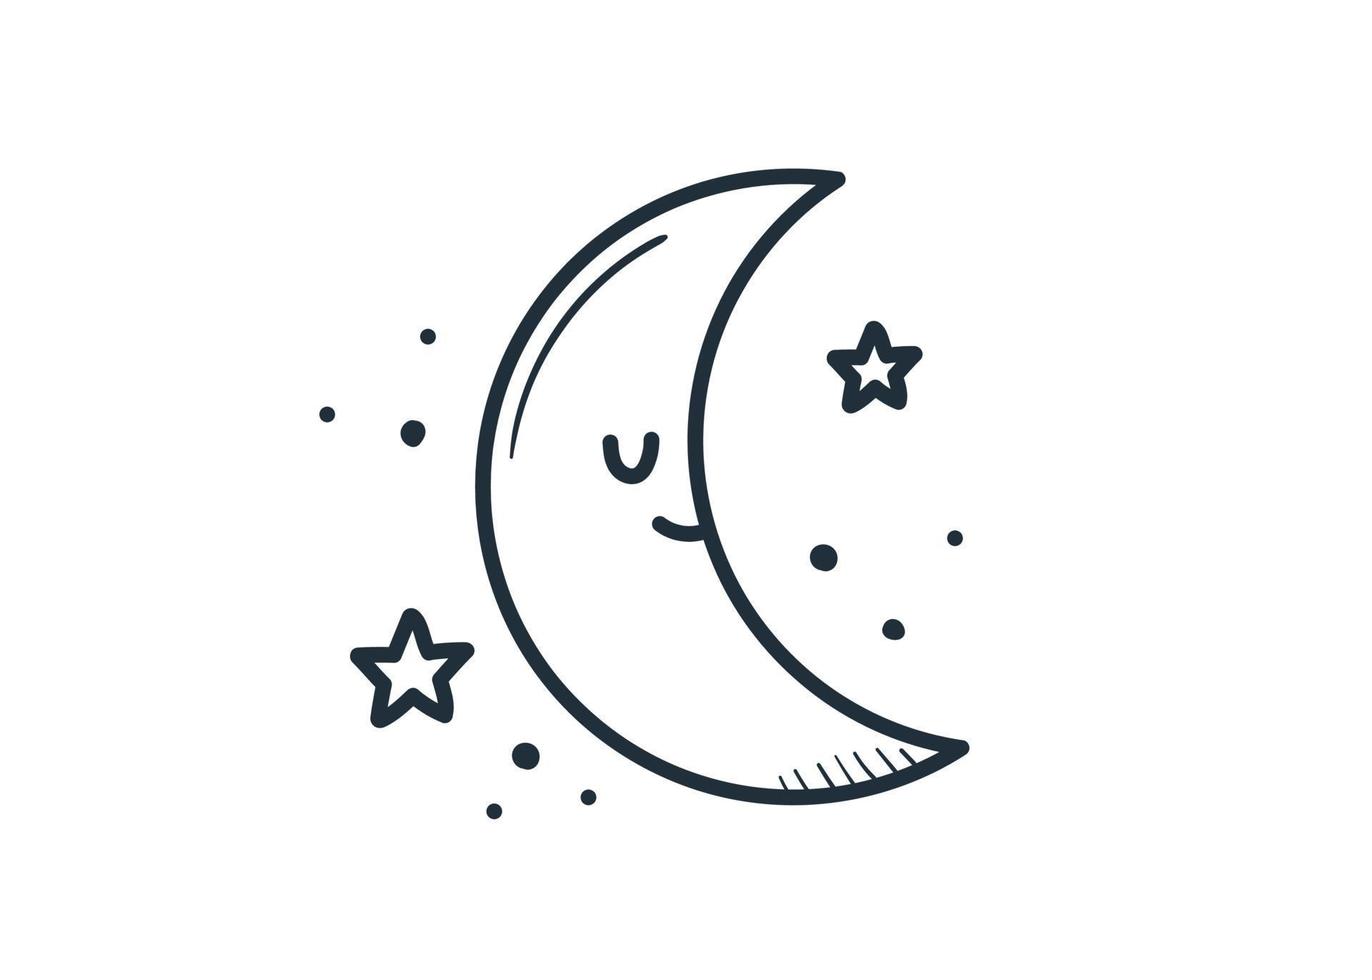 minimal cute moon sticker set kawaii doodle flat cartoon vector